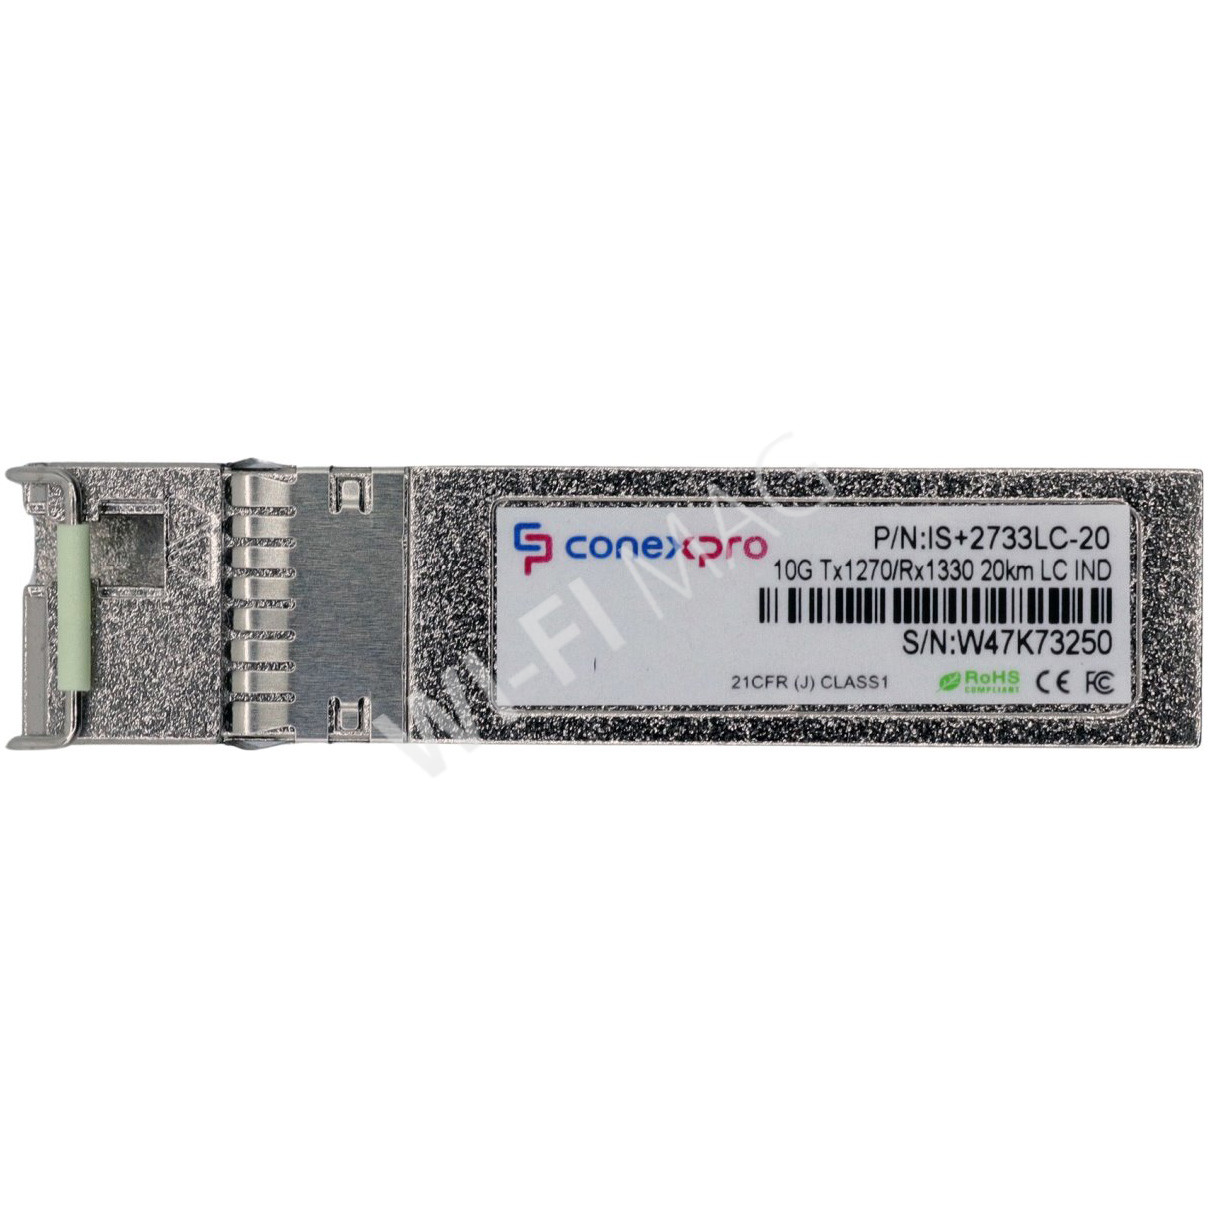 Conexpro IS+2733LC-20 промышленный модуль SFP+ Single Mode, 10 Гбит/с, LC, WDM/BiDi, 20 км (Tx=1270/Rx=1330)